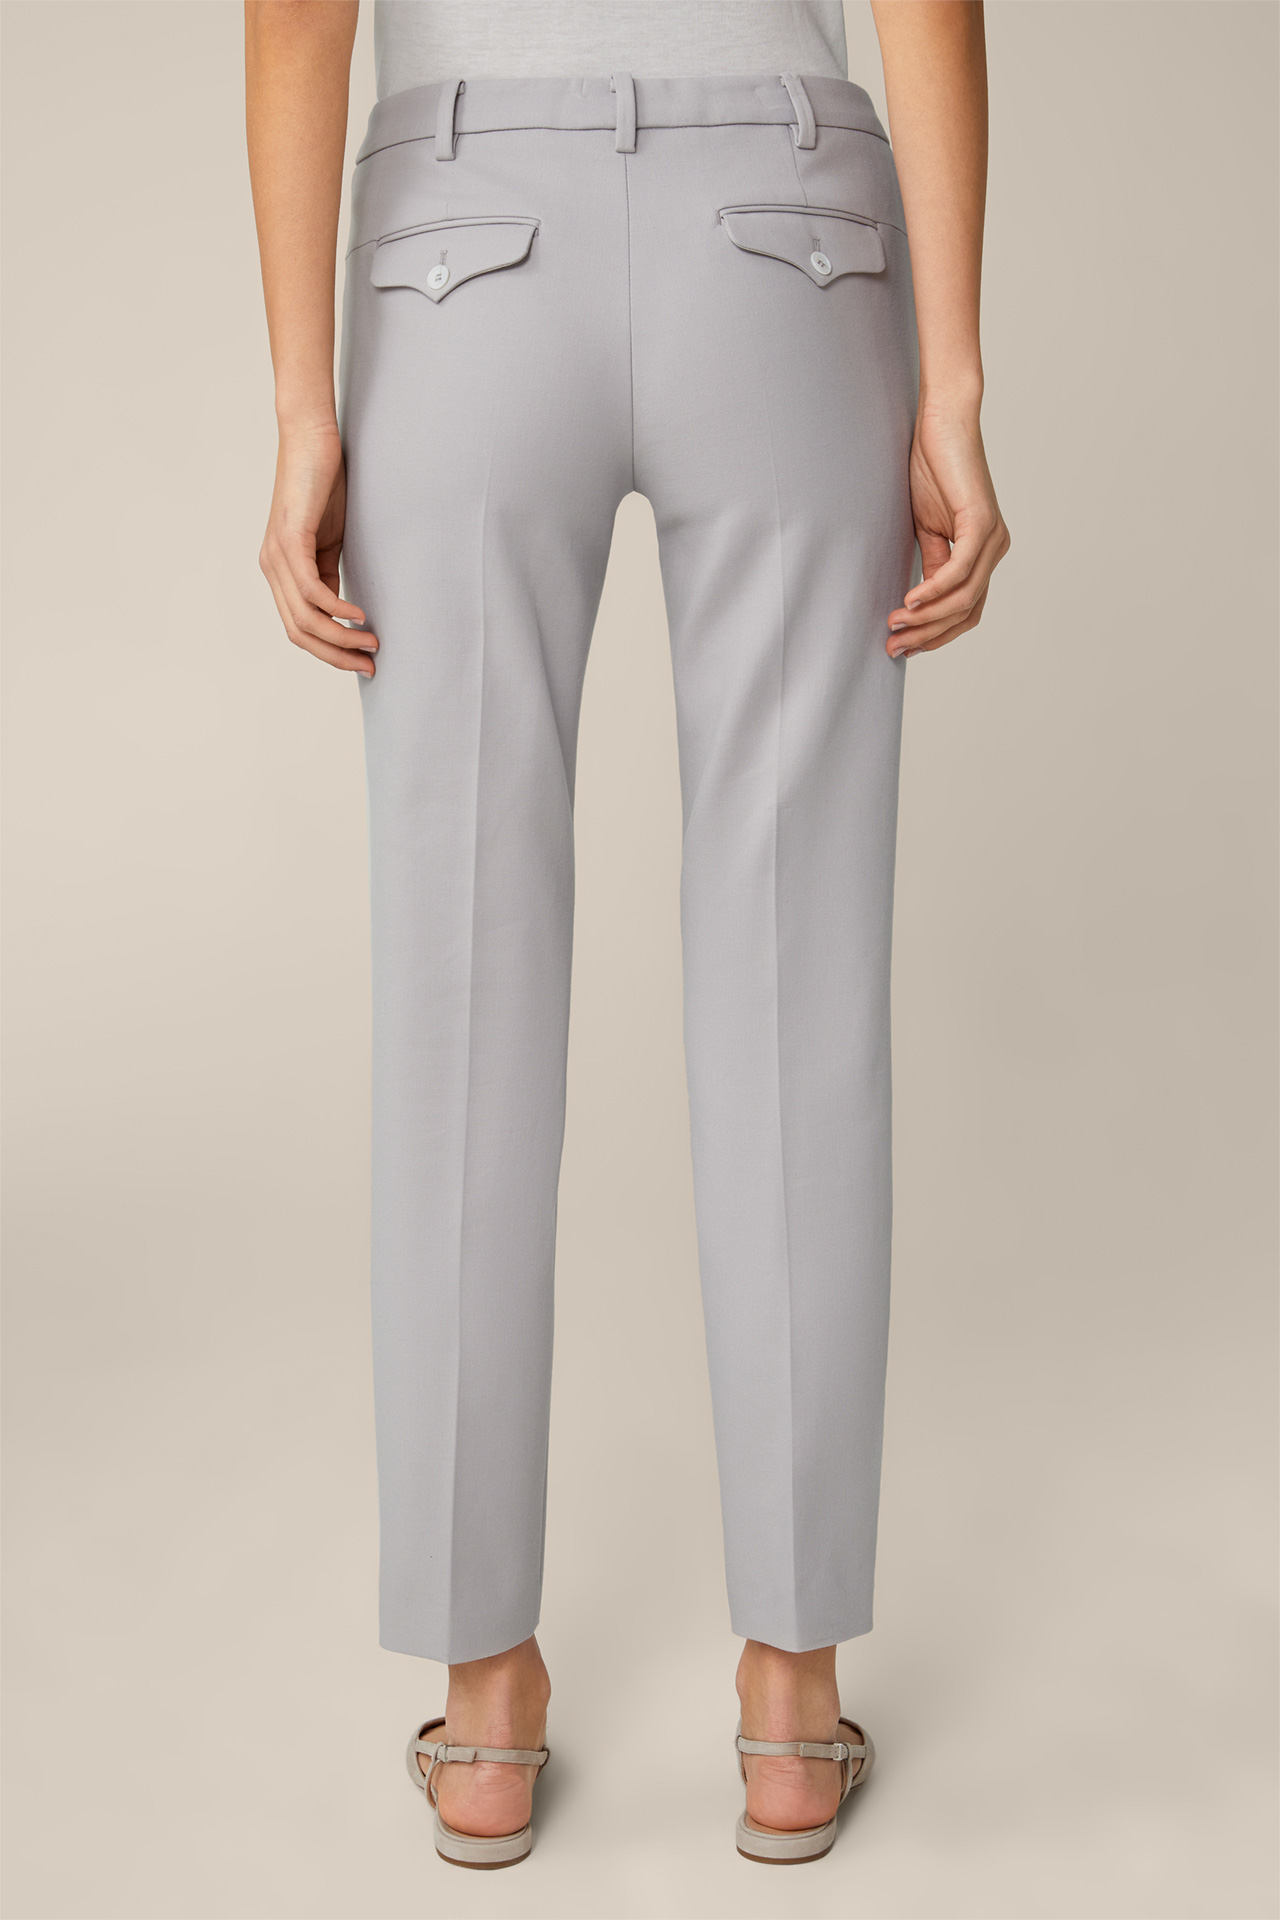 Baumwollstretch-Anzug-Hose in Panamabindung in Grau